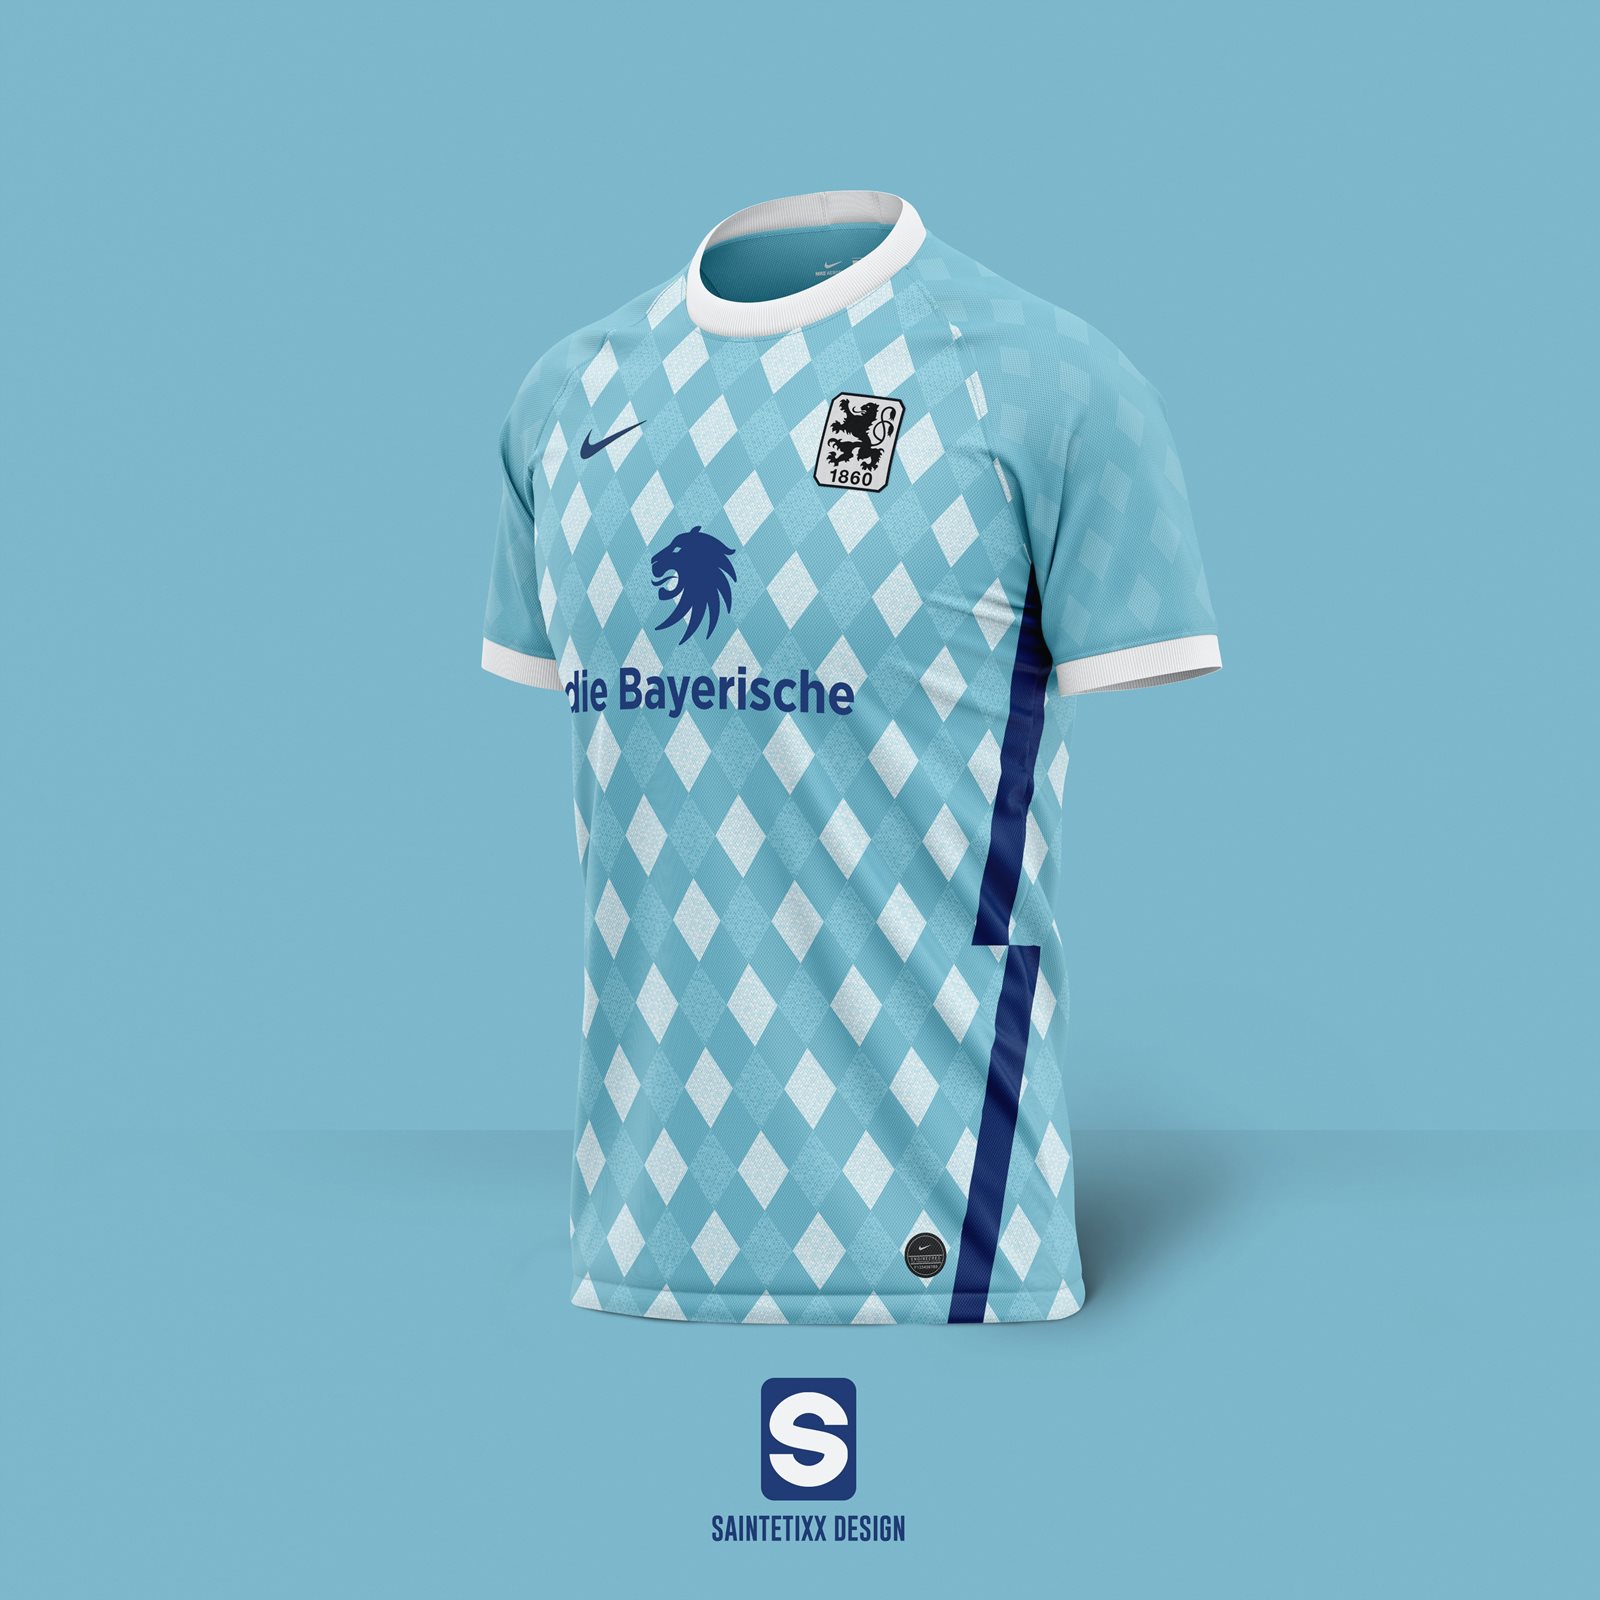 1860 Munich 2020-21 Nike Home Kit - Football Shirt Culture - Latest  Football Kit News and More